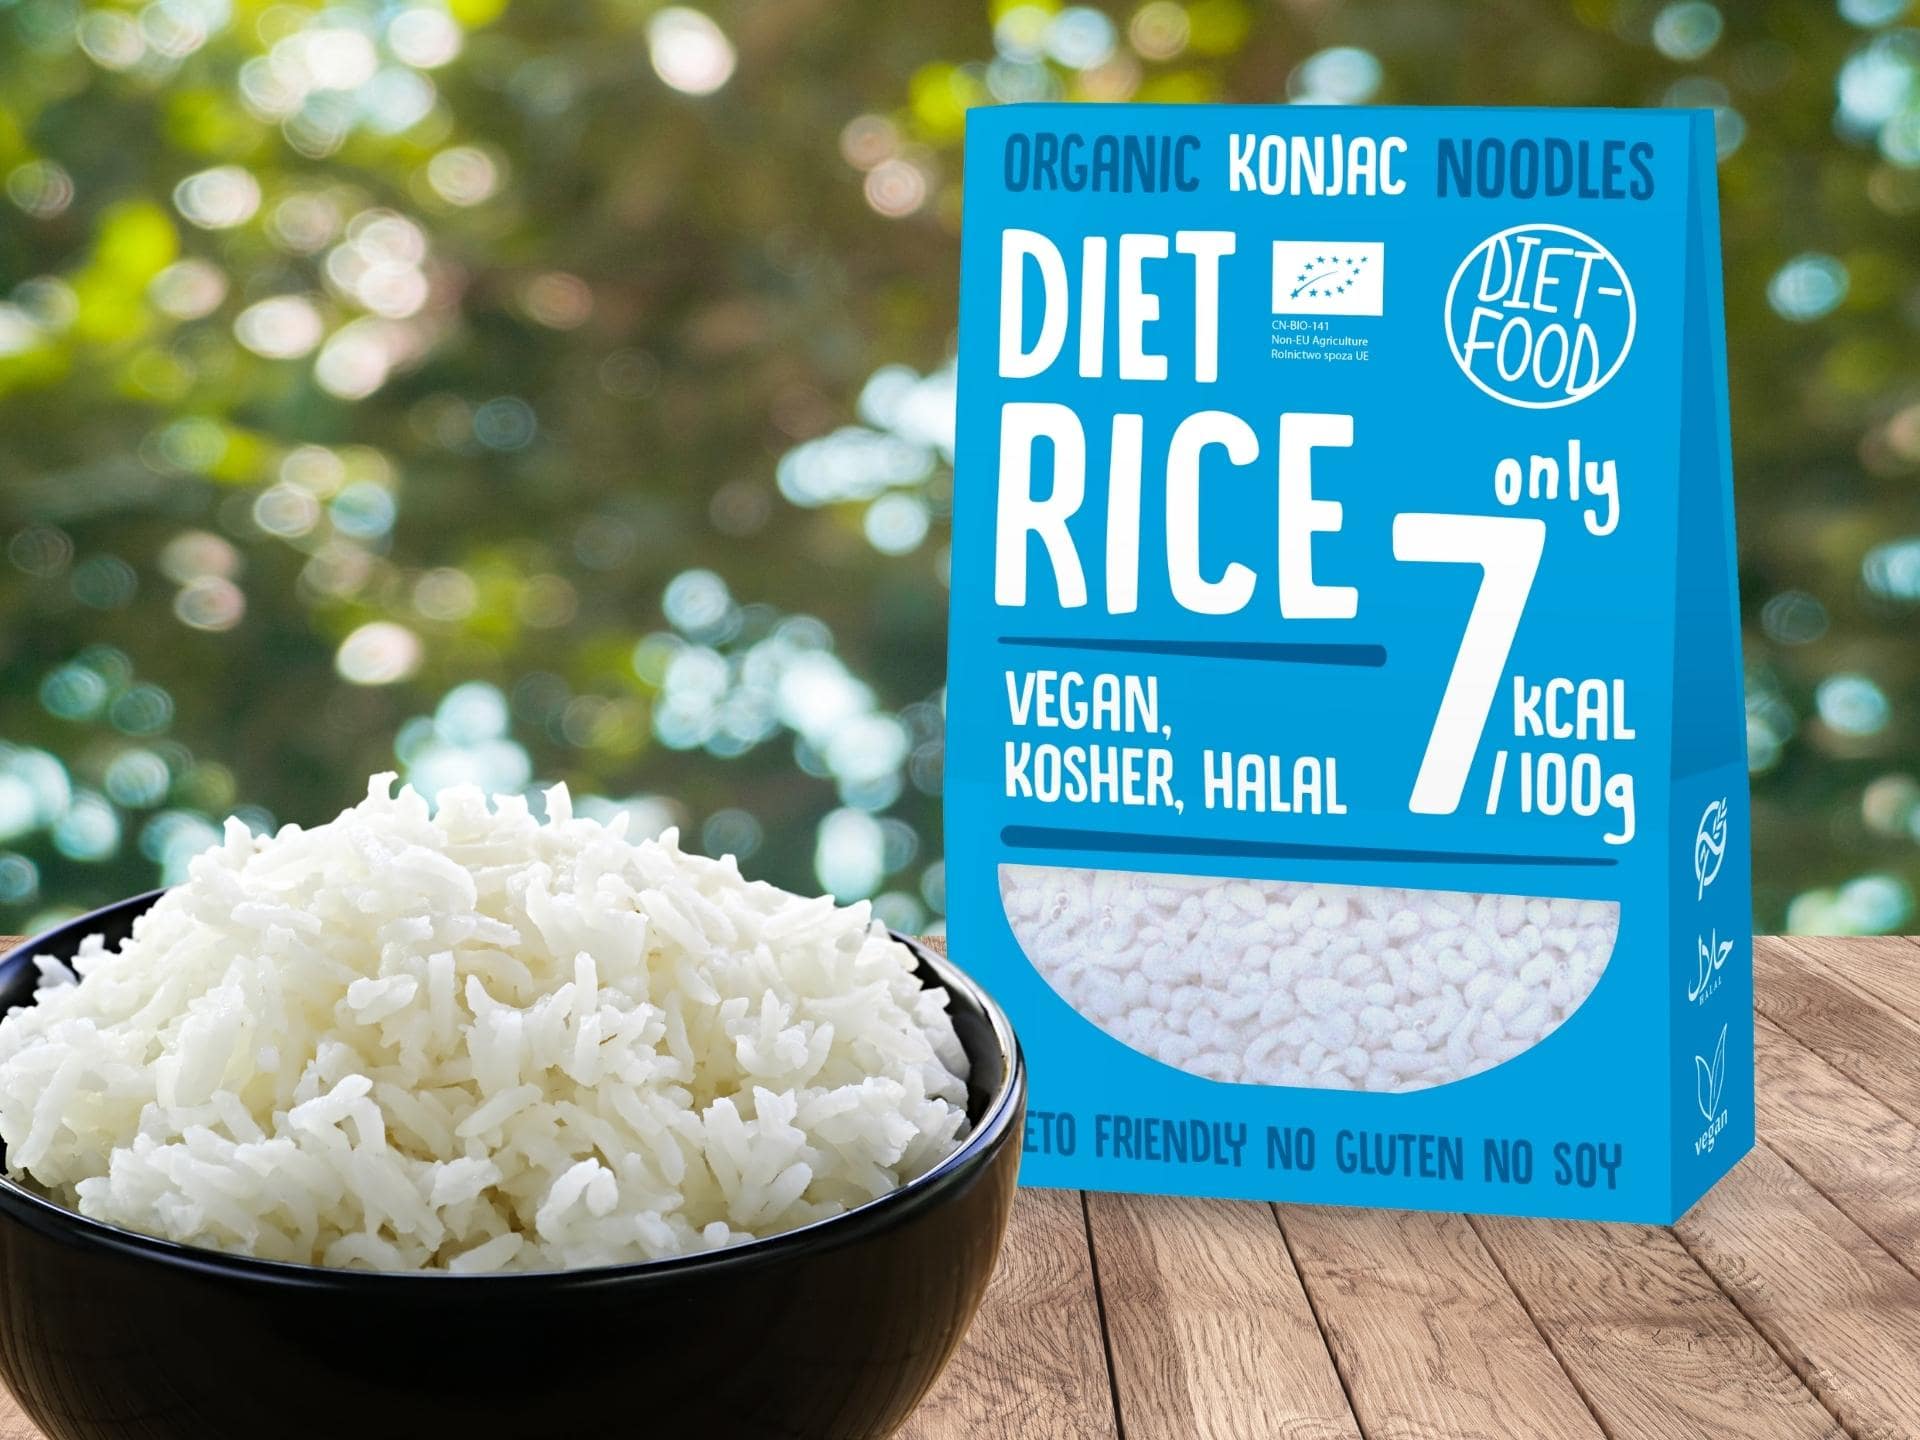 DIET FOOD Bio - Diet Rice- 300g - Makaron Konjac